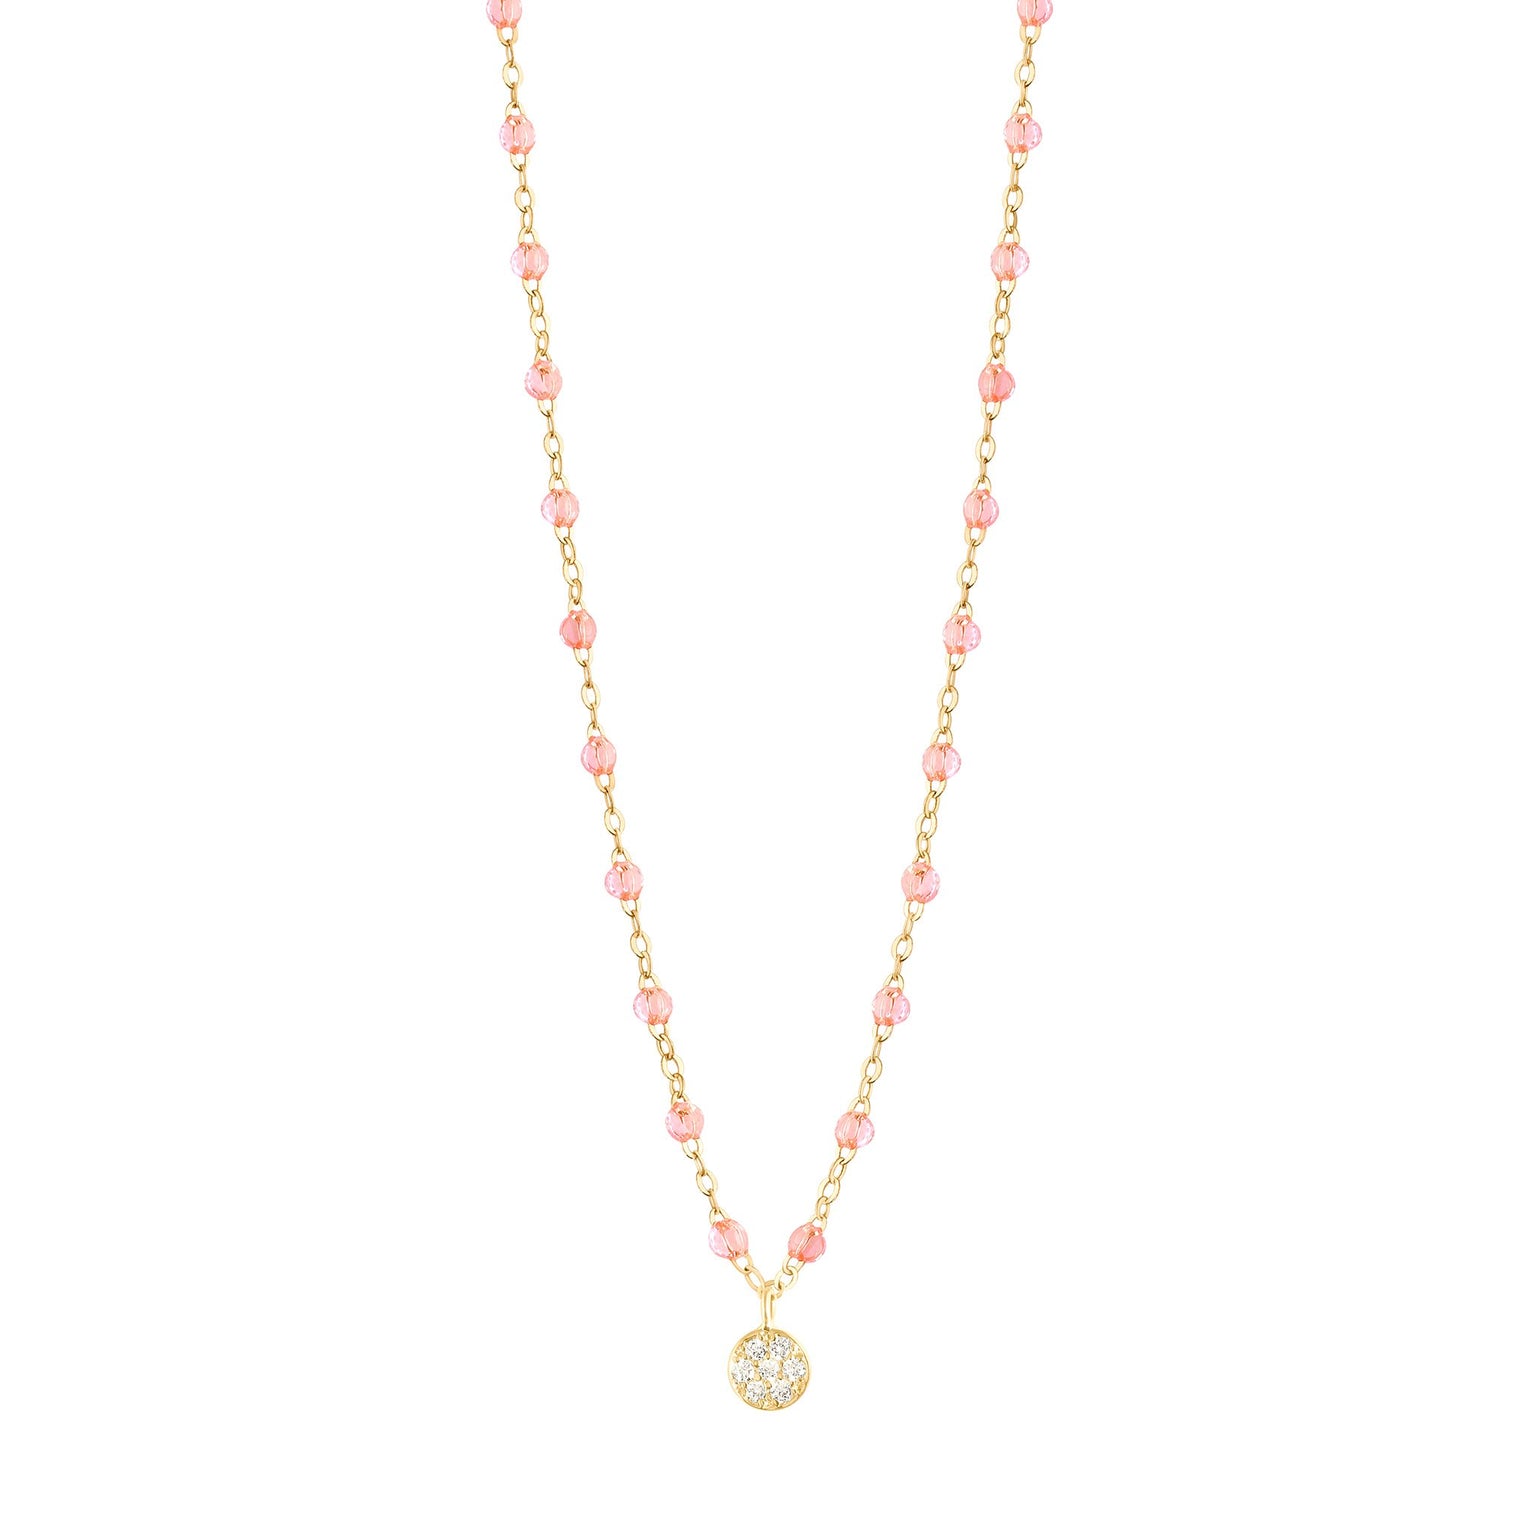 Puce Classic Gigi Rosée diamond necklace, Yellow Gold, 16.5